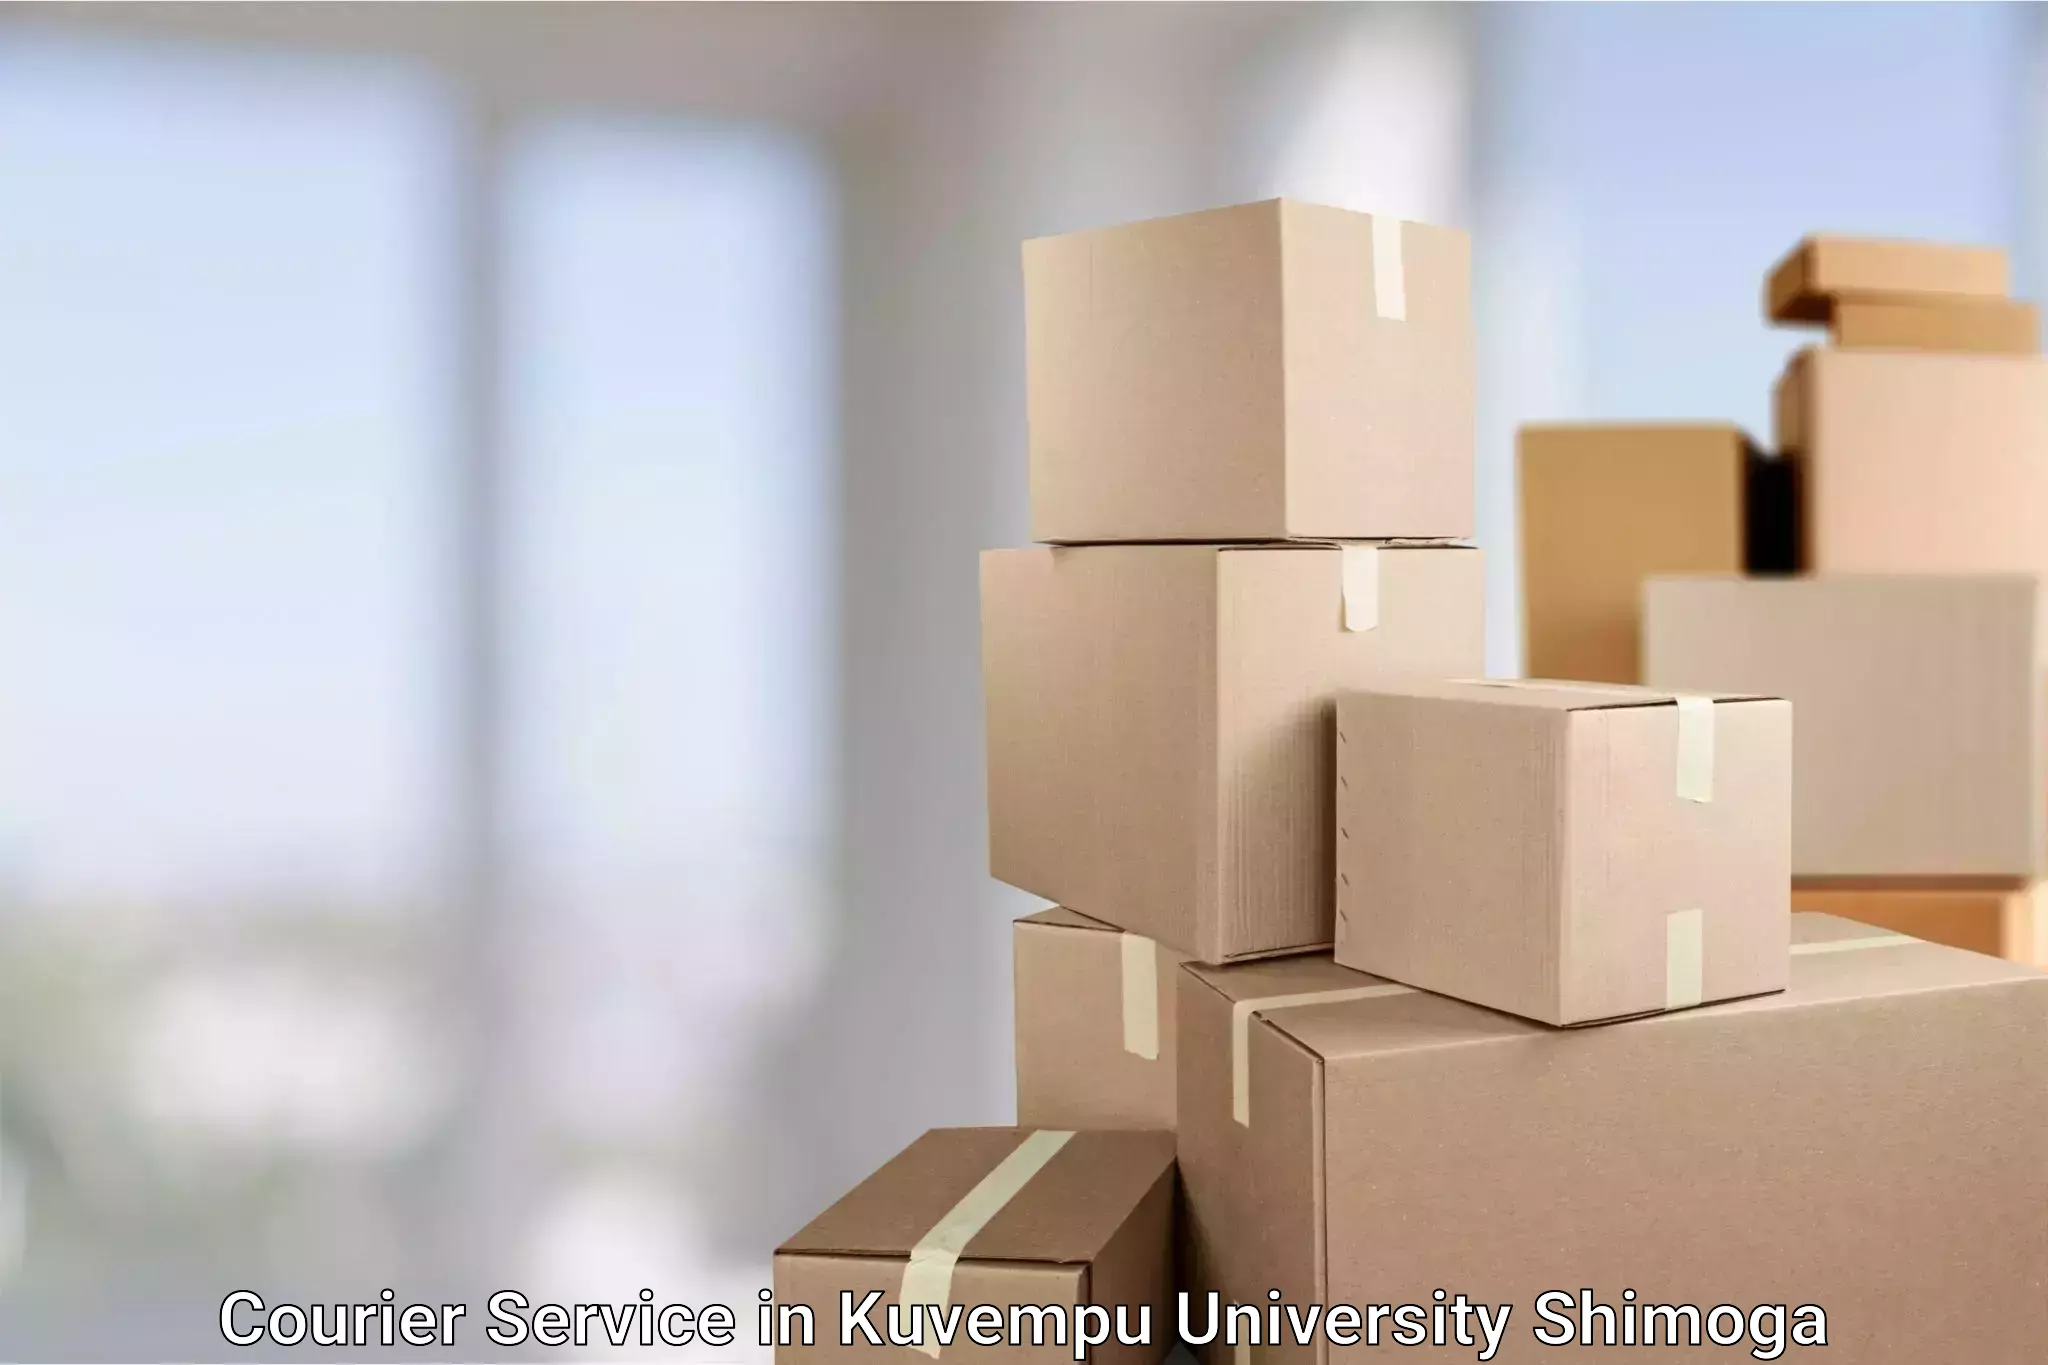 Automated parcel services in Kuvempu University Shimoga